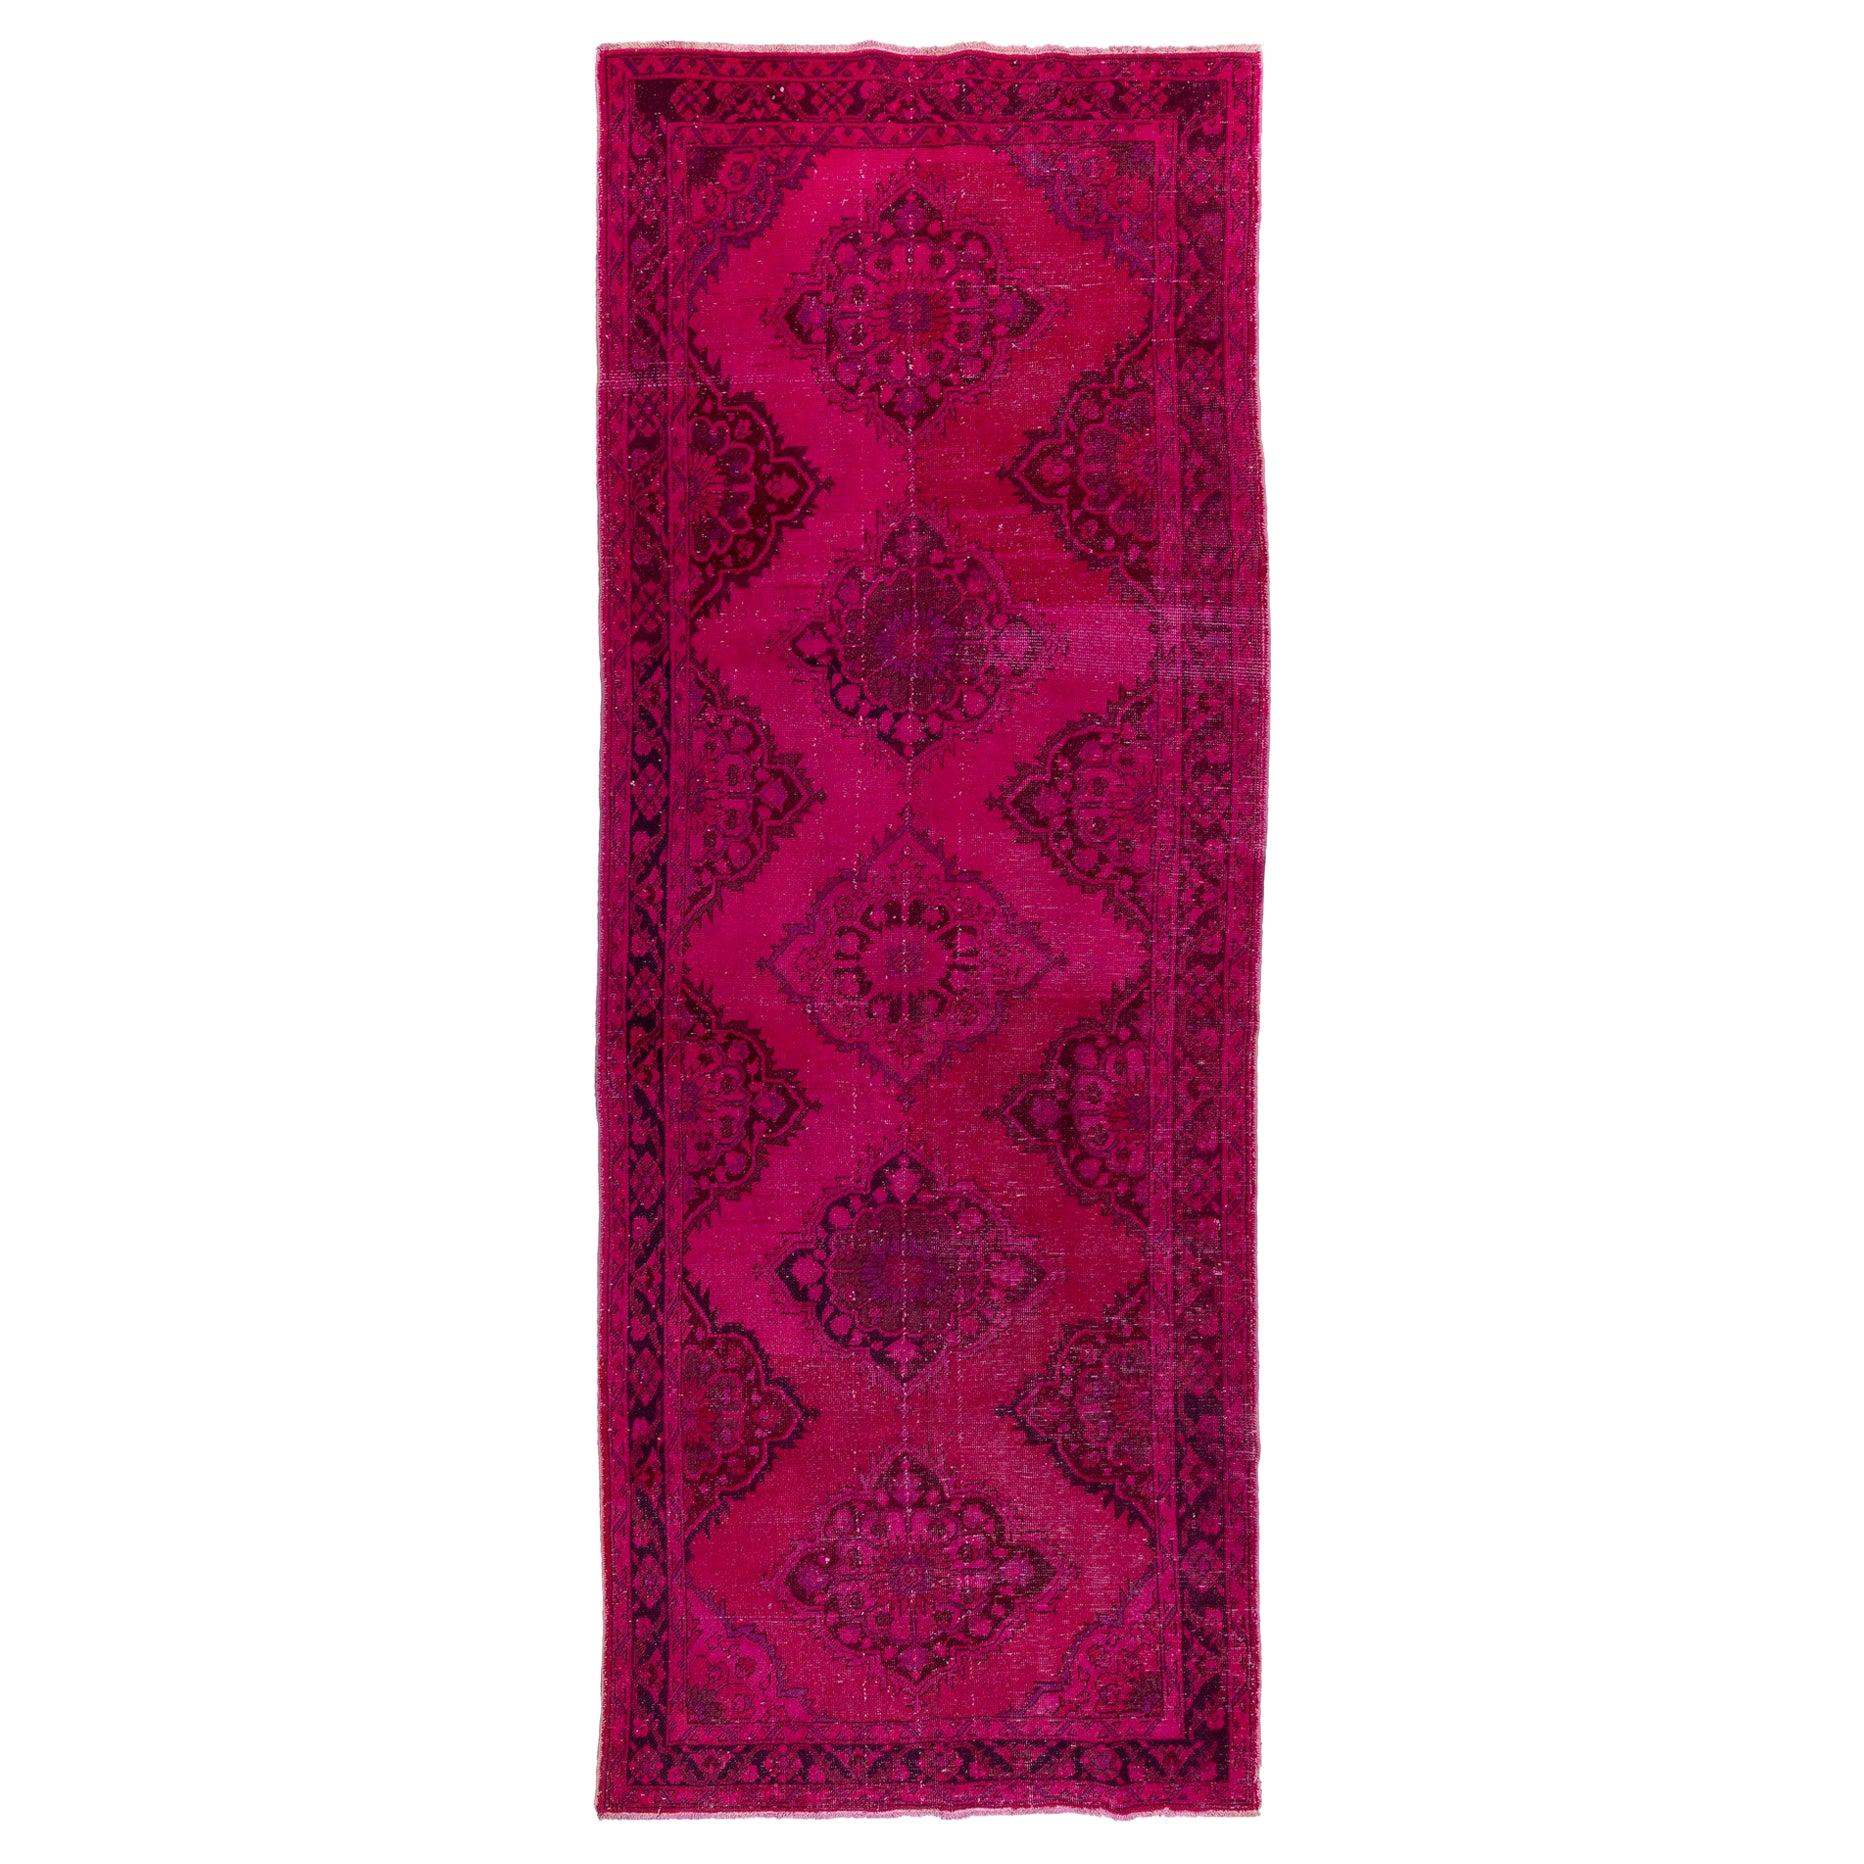 4.8x12.3 Ft Vintage Handmade Konya, Sille Runner Rug Over-Dyed in Fuchsia Pink For Sale